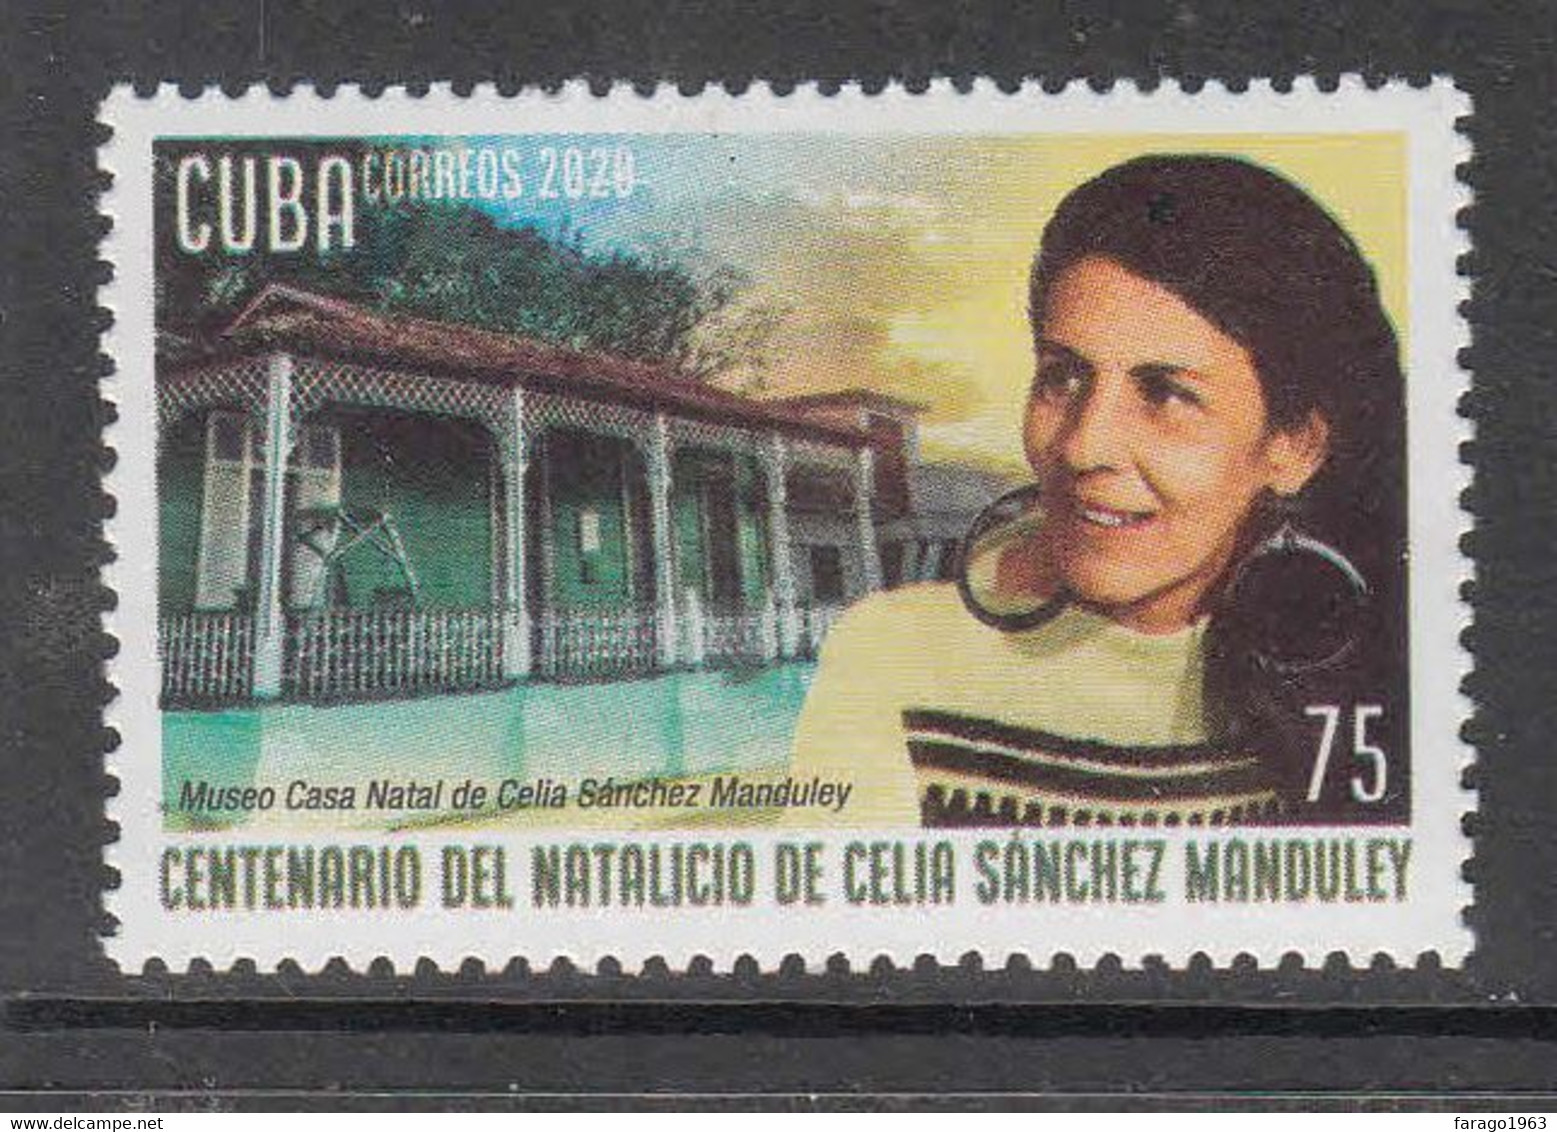 2020 Cuba Manduley Complete Set Of 1 MNH - Unused Stamps